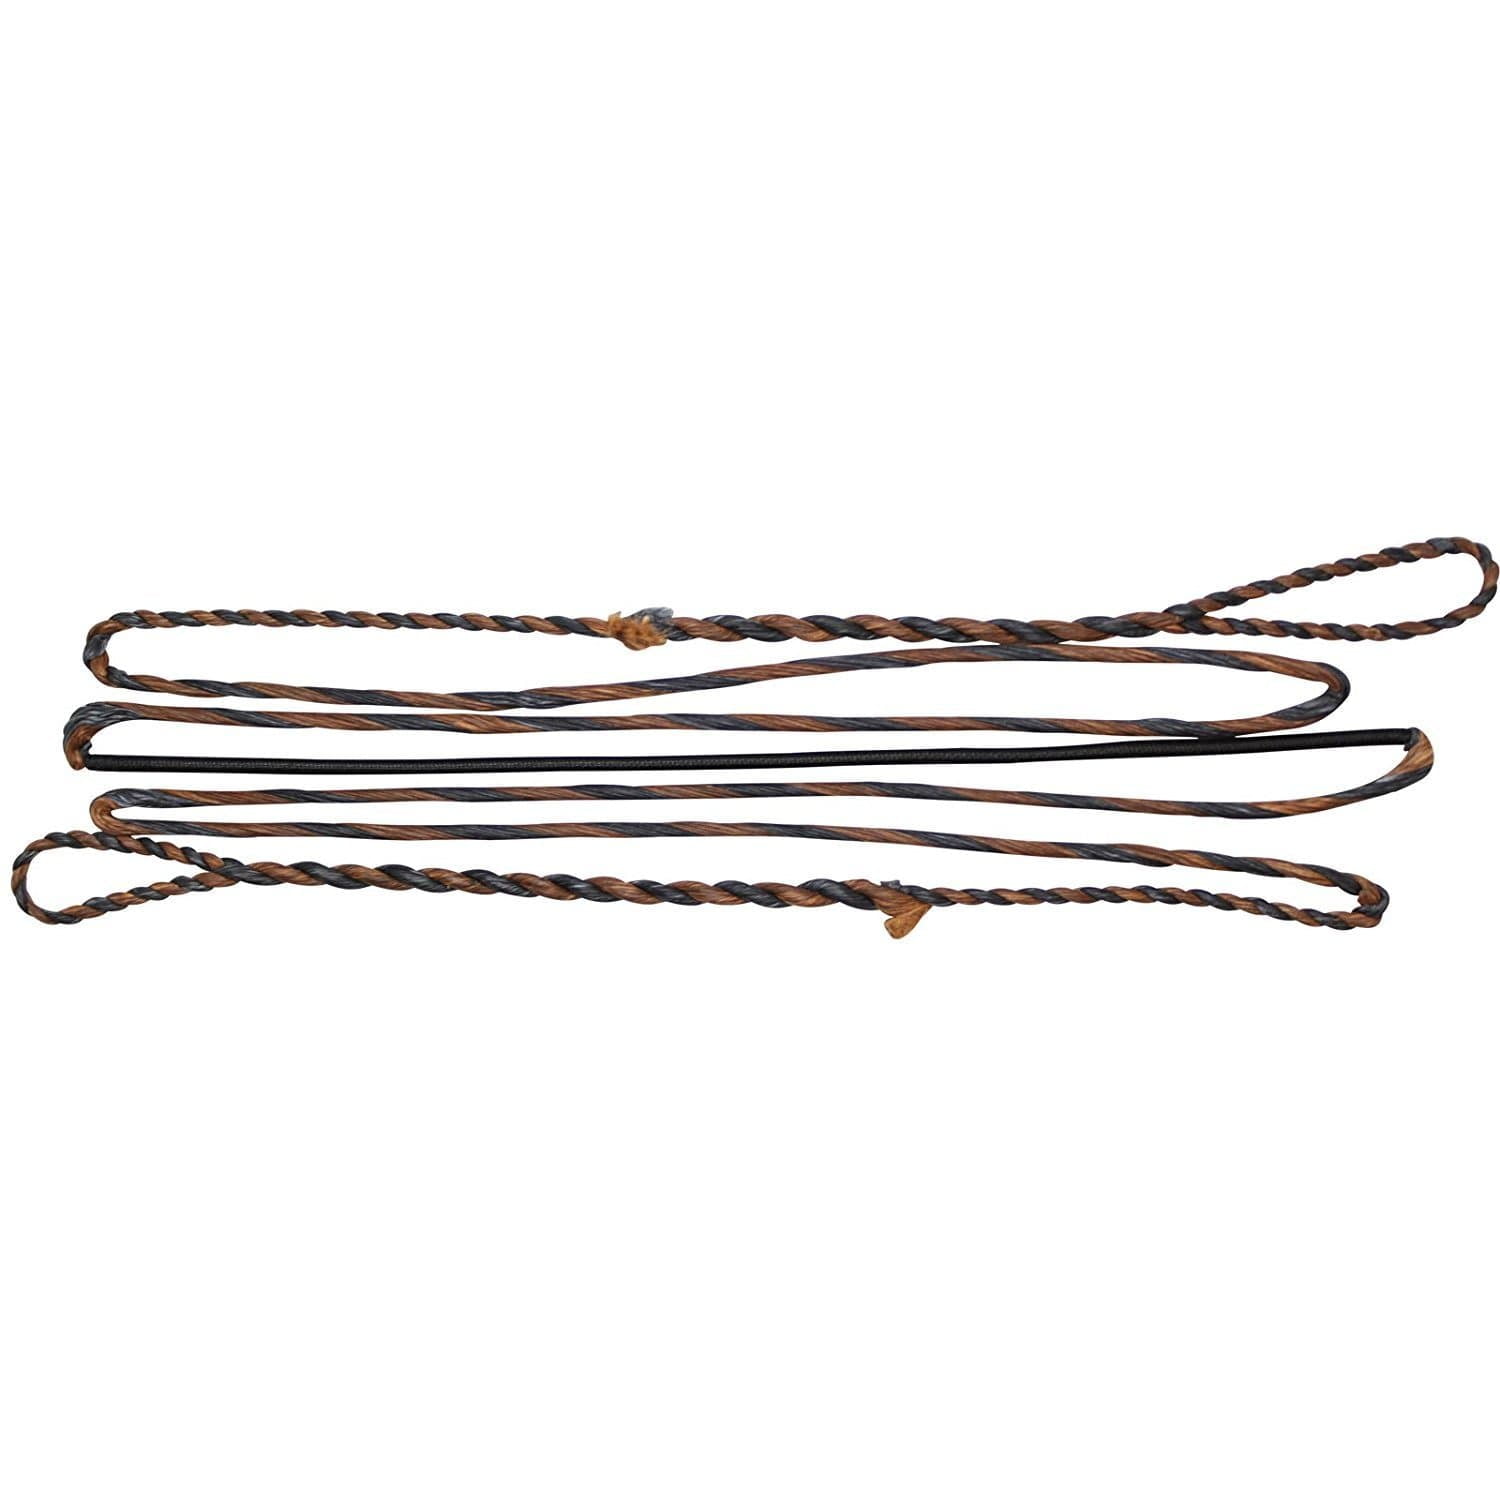 B50 56"  60 AMO Recurve Bow String 18 strands Dacron Traditional 